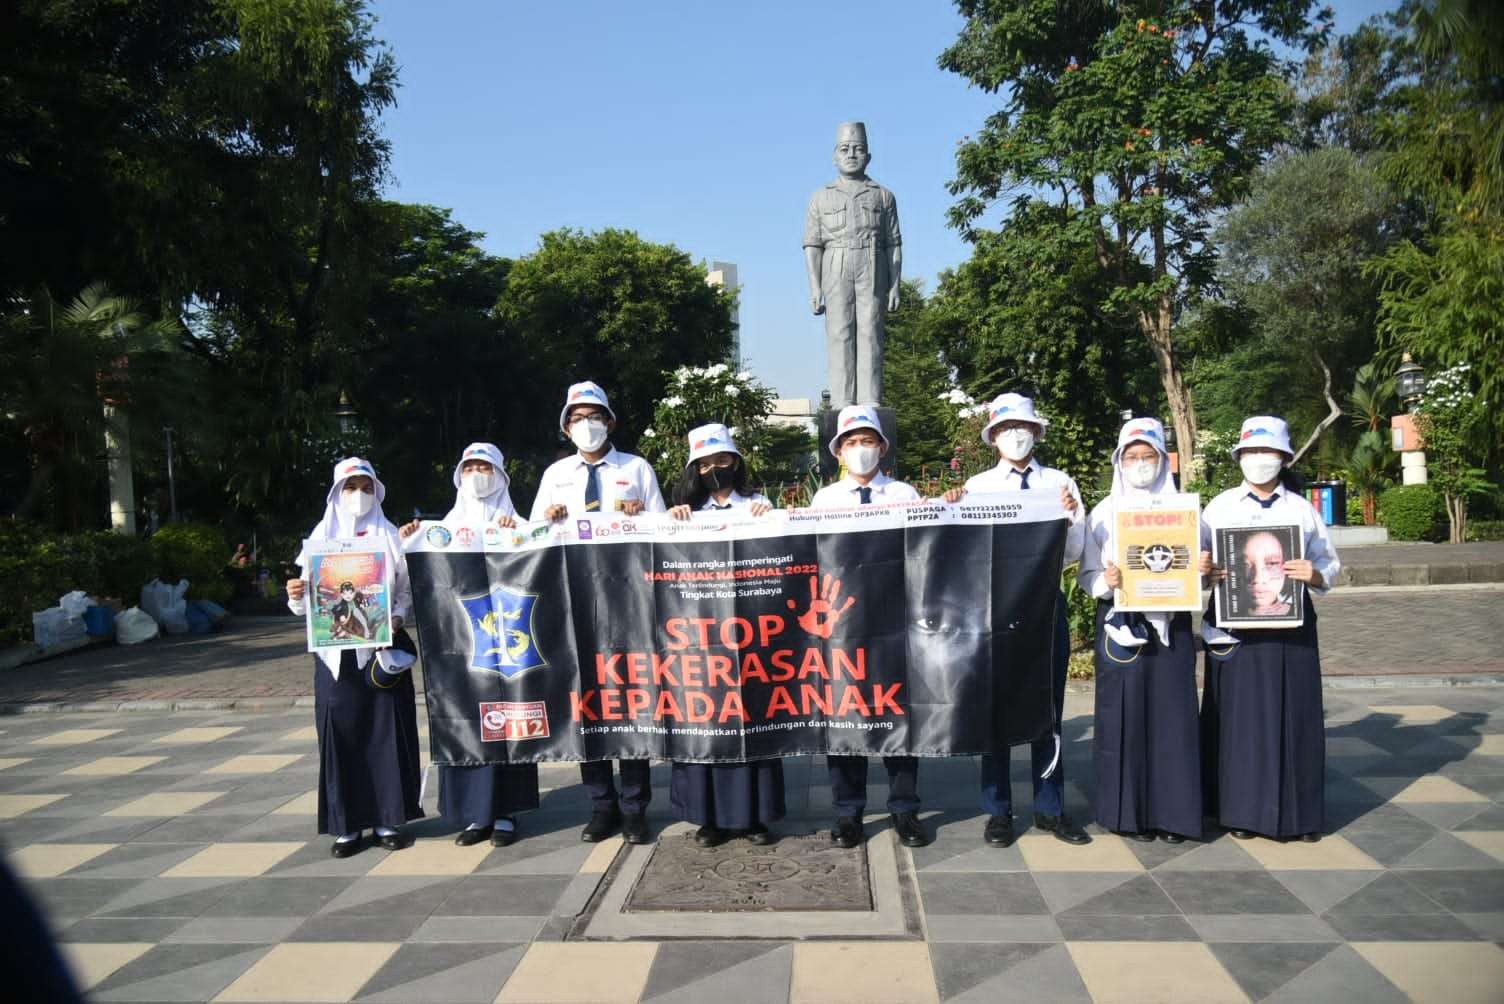 Kampanye stop kekerasan kepada anak yang dilakukan pelajar di Surabaya, Rabu, 27 Juli 2022. (Foto: Istimewa)